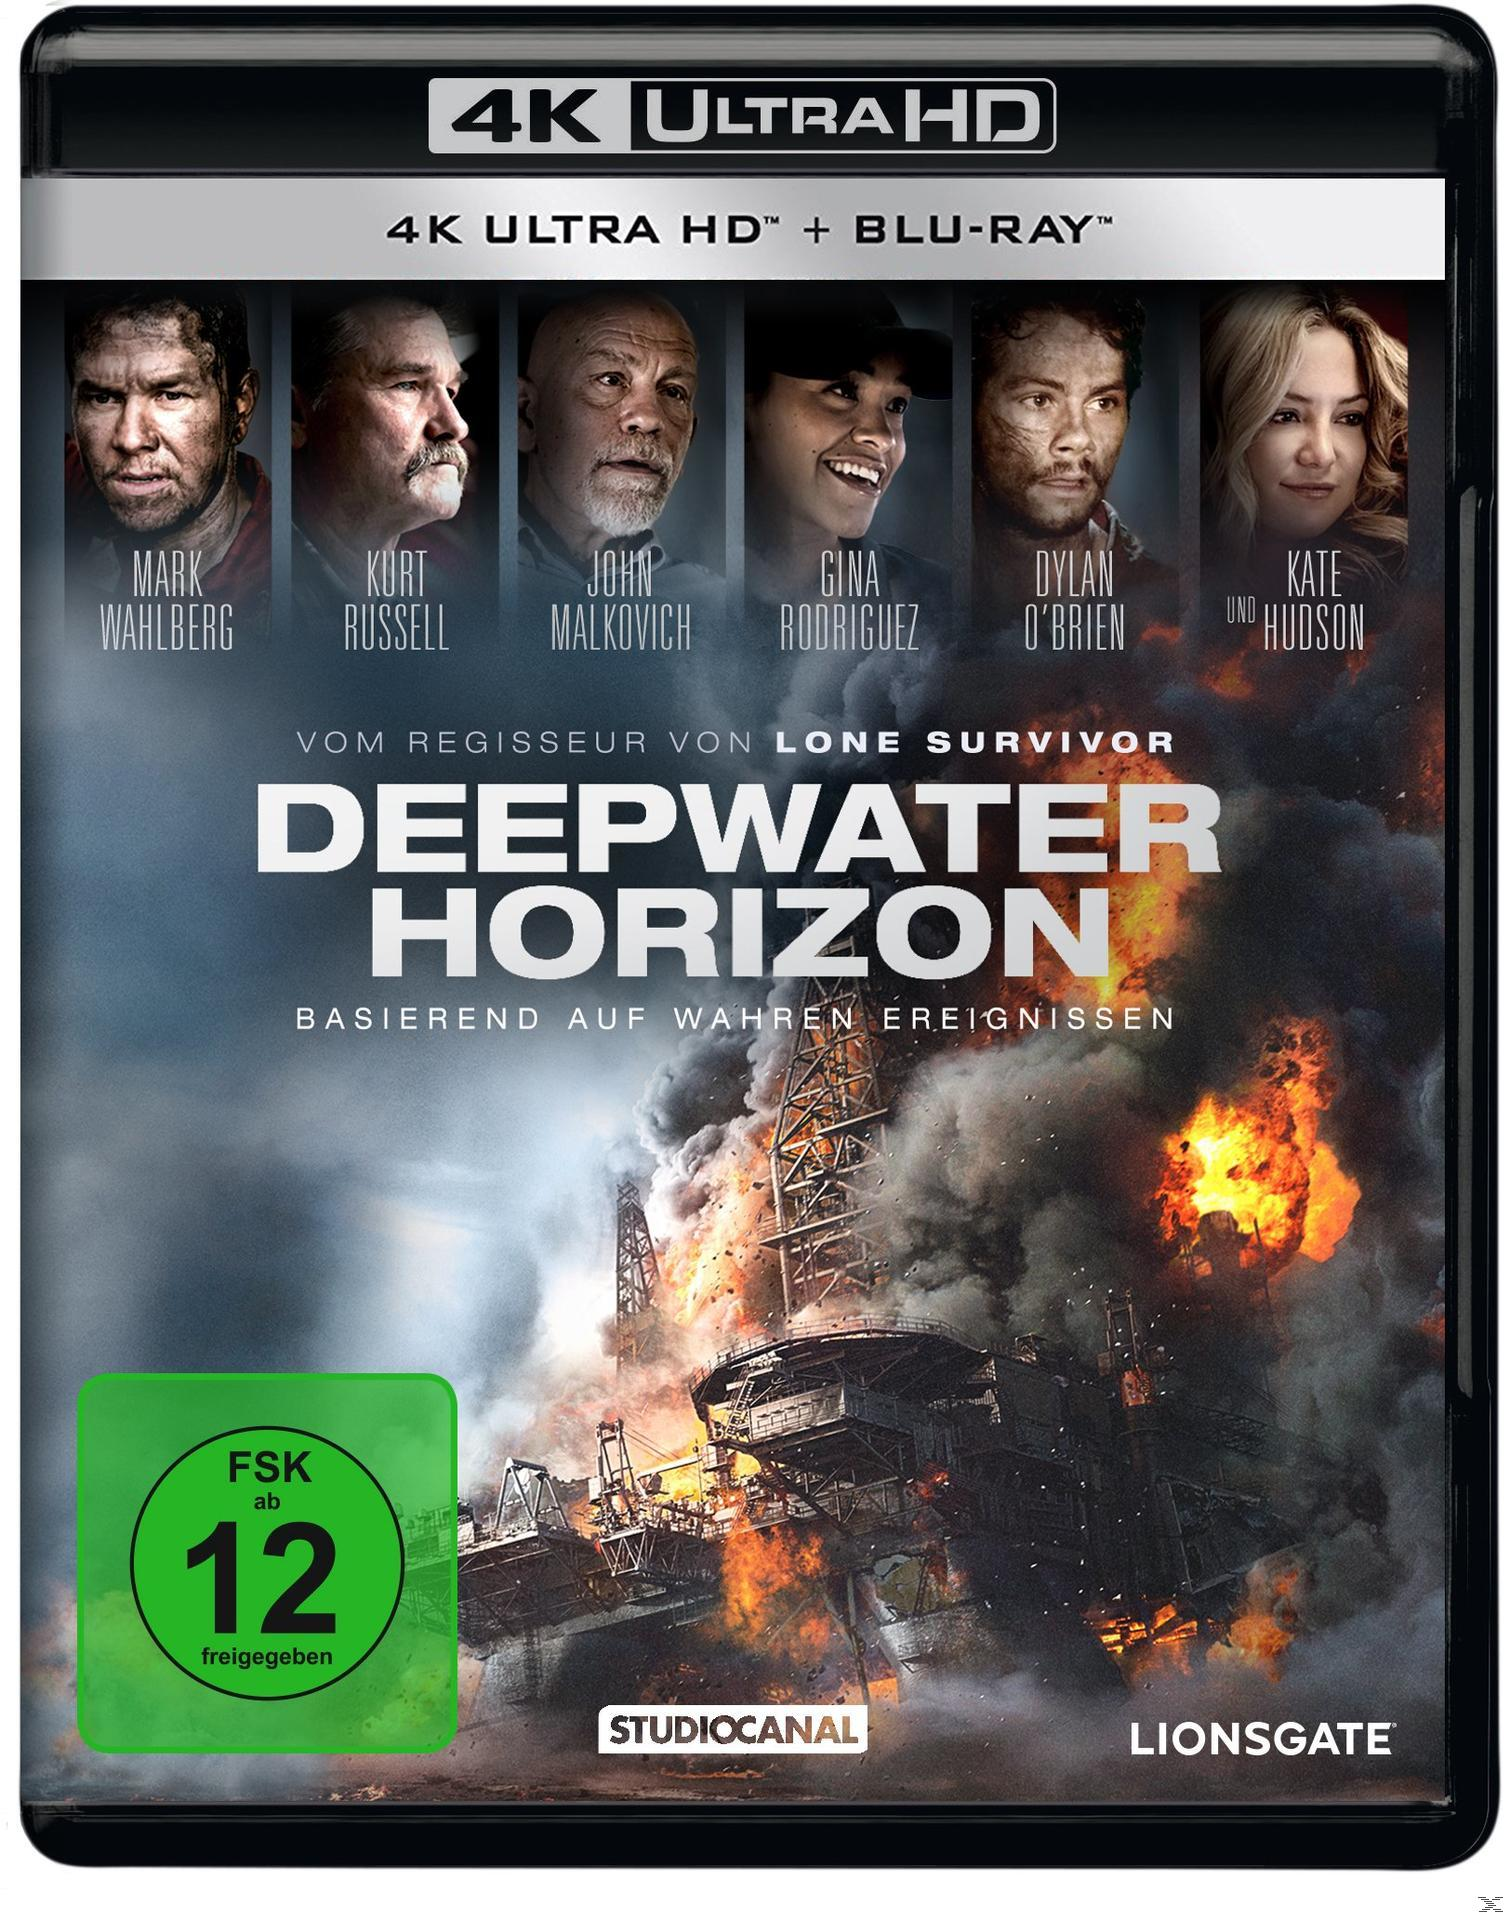 Blu-ray HD + Deepwater Horizon 4K Ultra Blu-ray